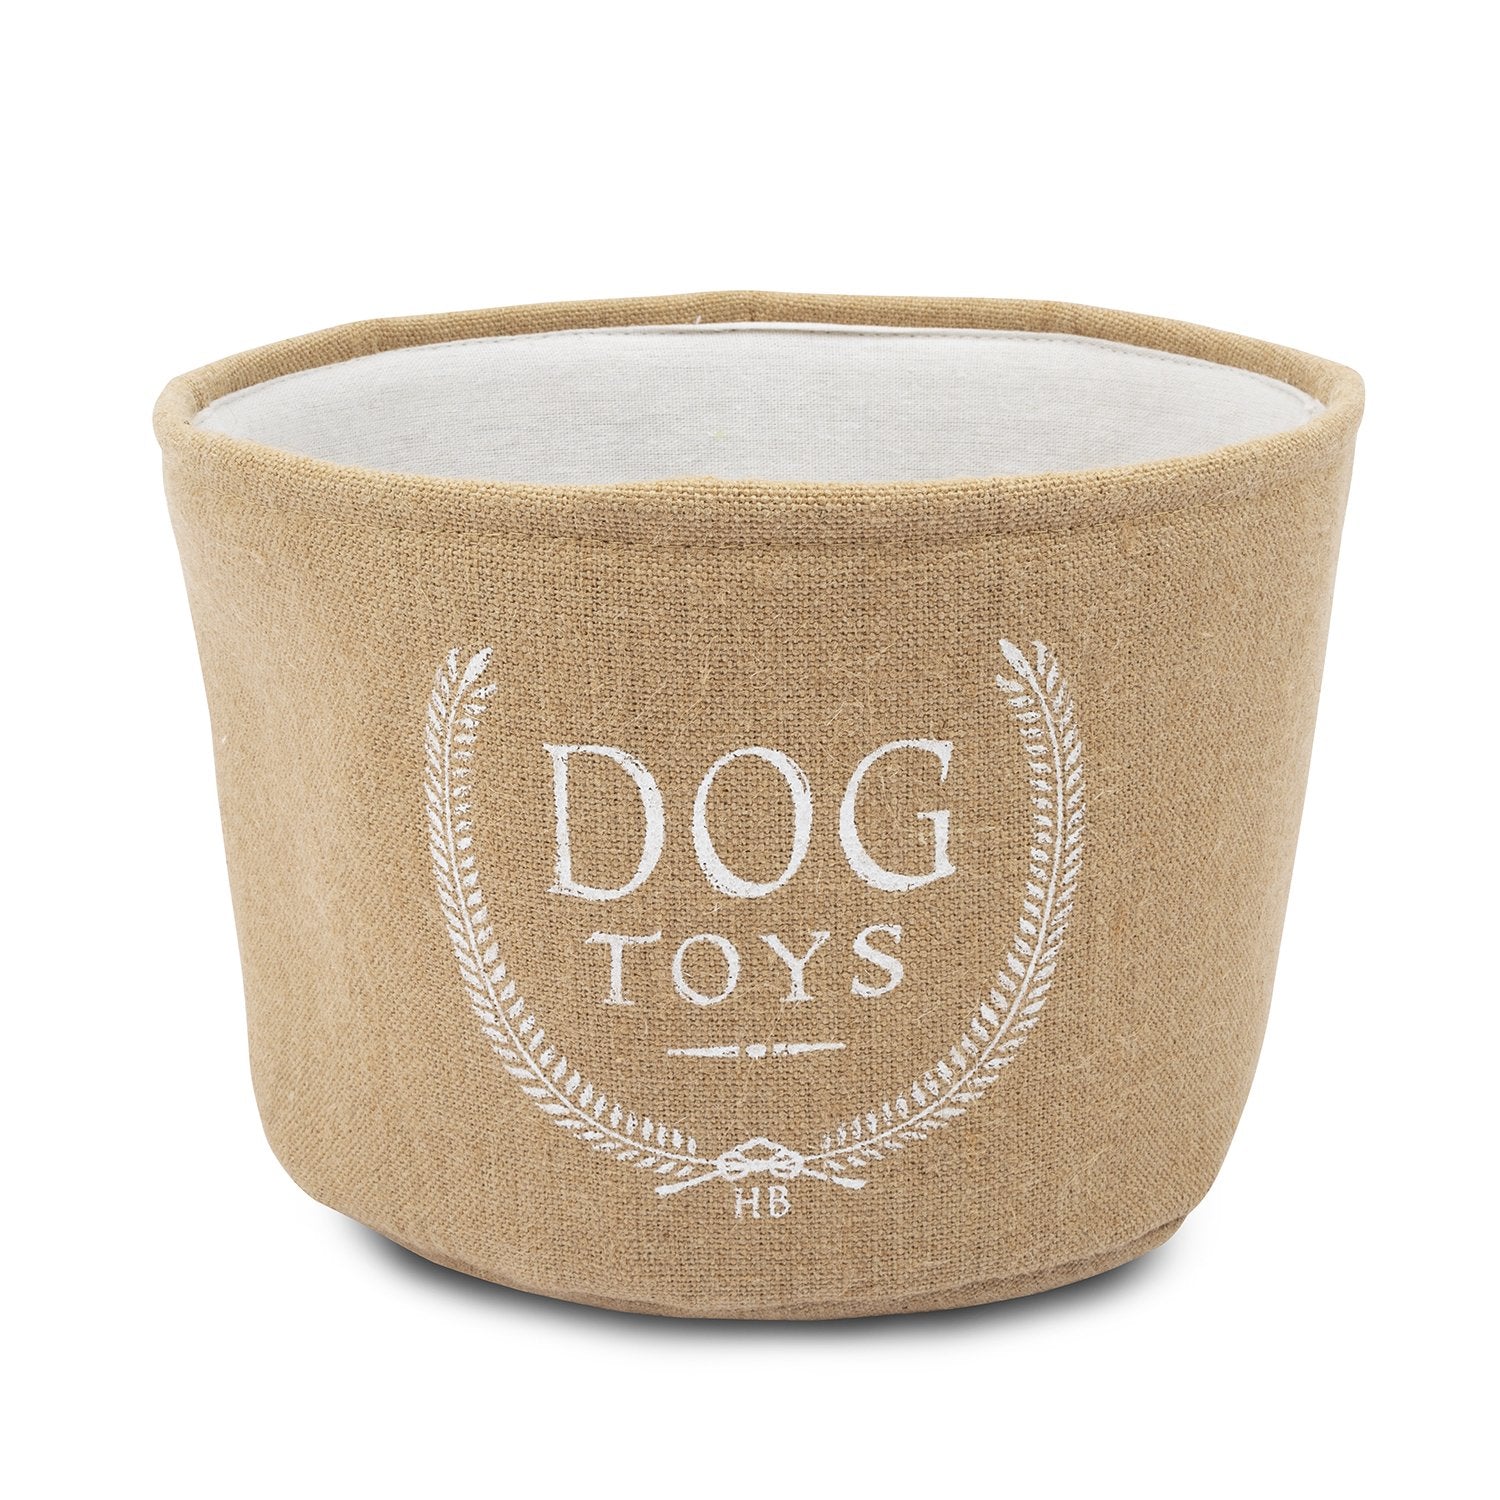 Dog Toys Basket, Dog Toys Storage Bag, Dog Toys Bin, Dog Toys Organiser, Pet  Storage, Printed 